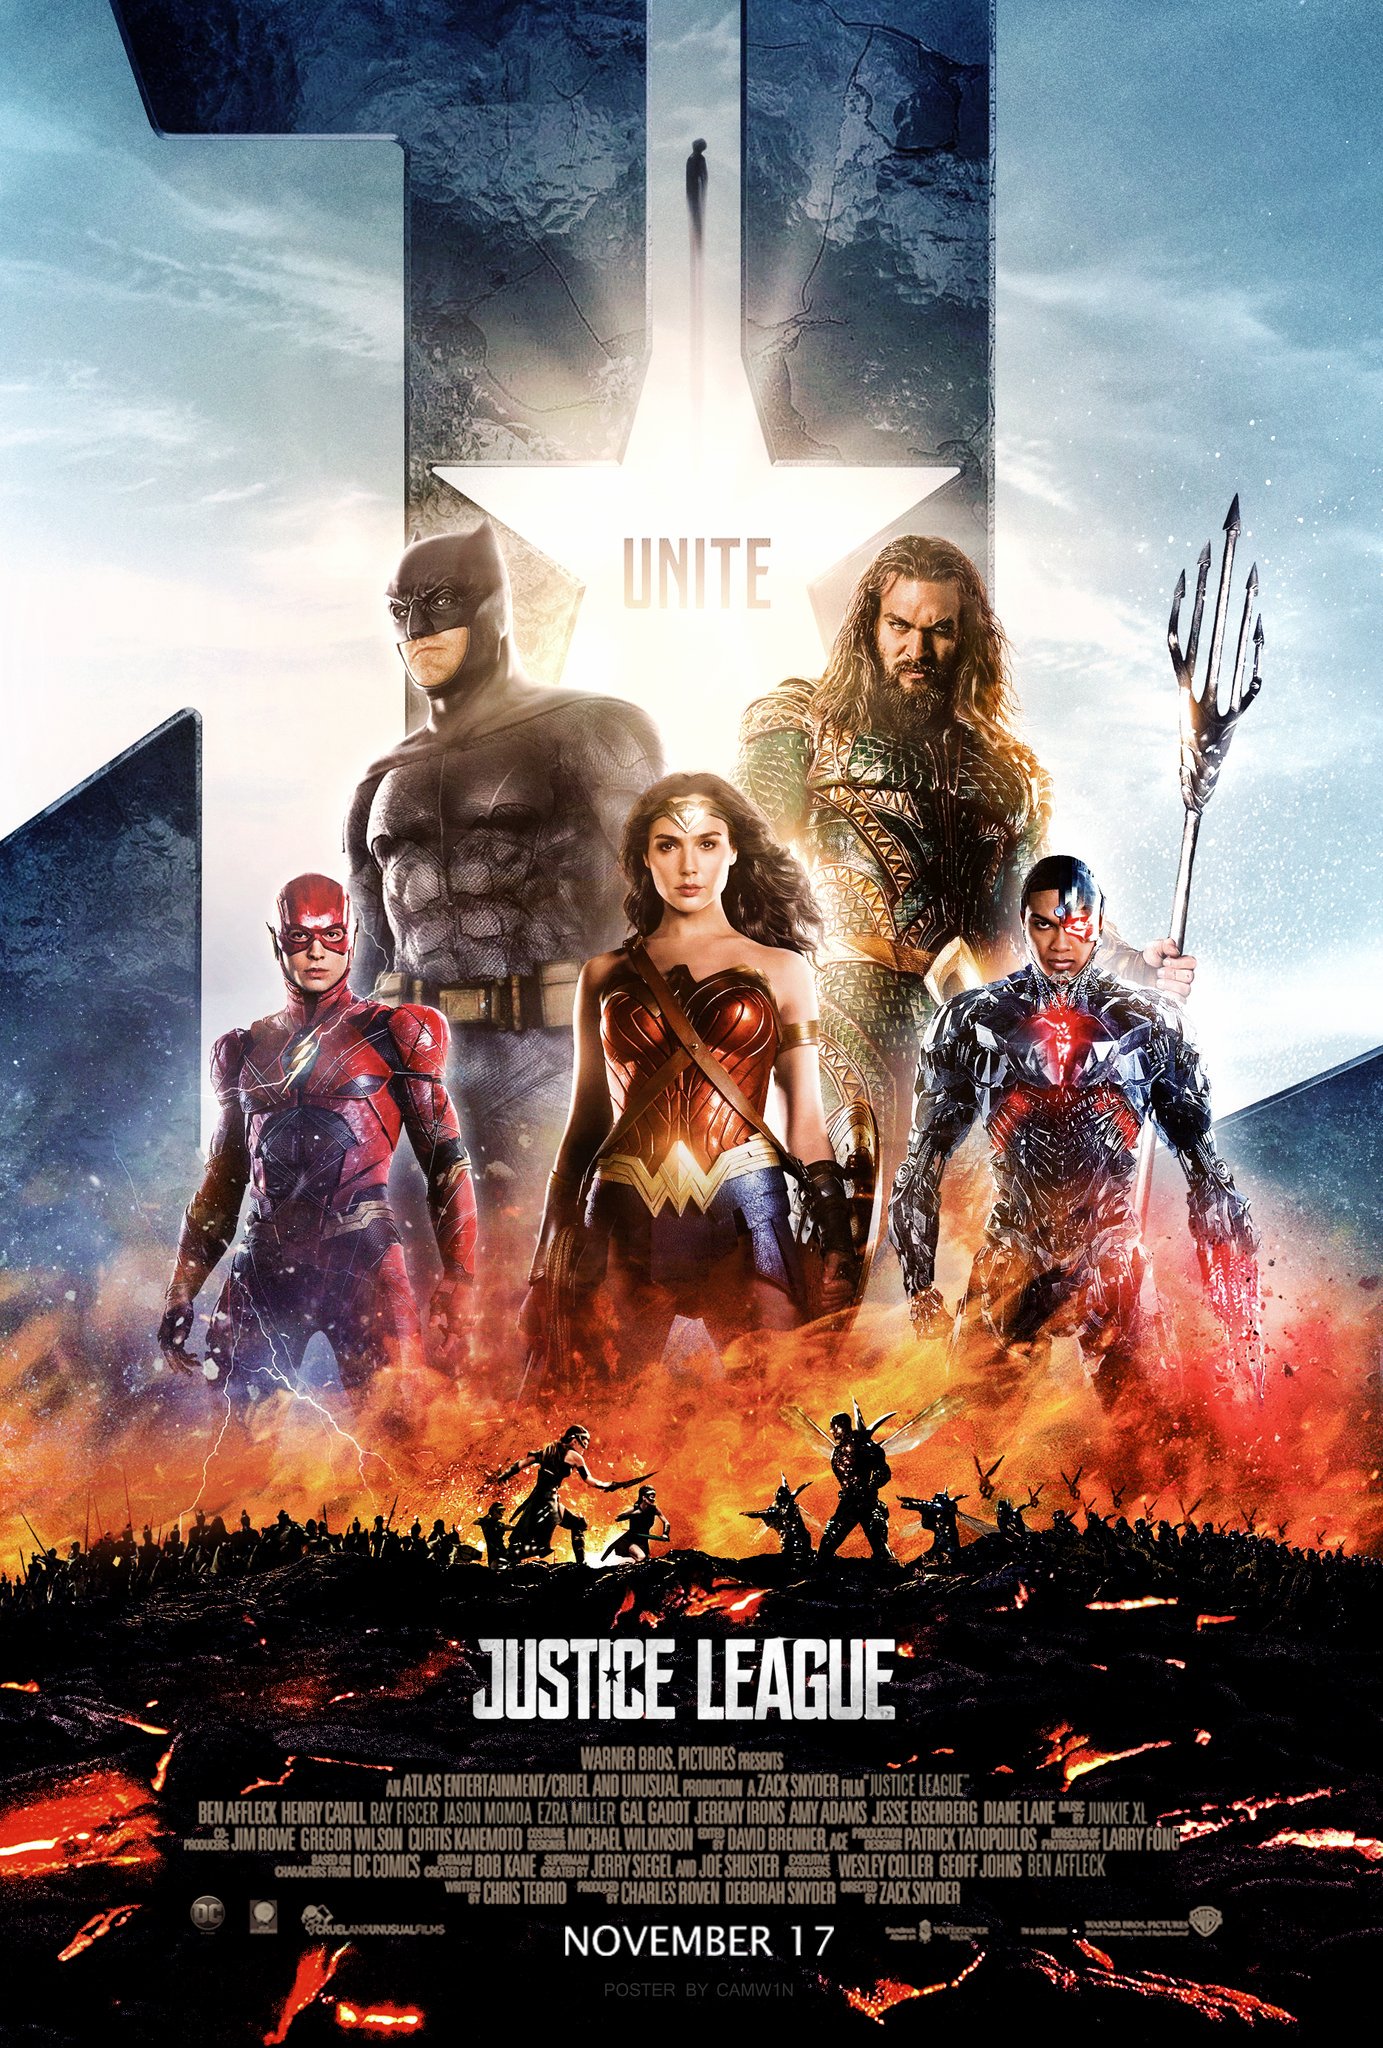 Justice League Sequel